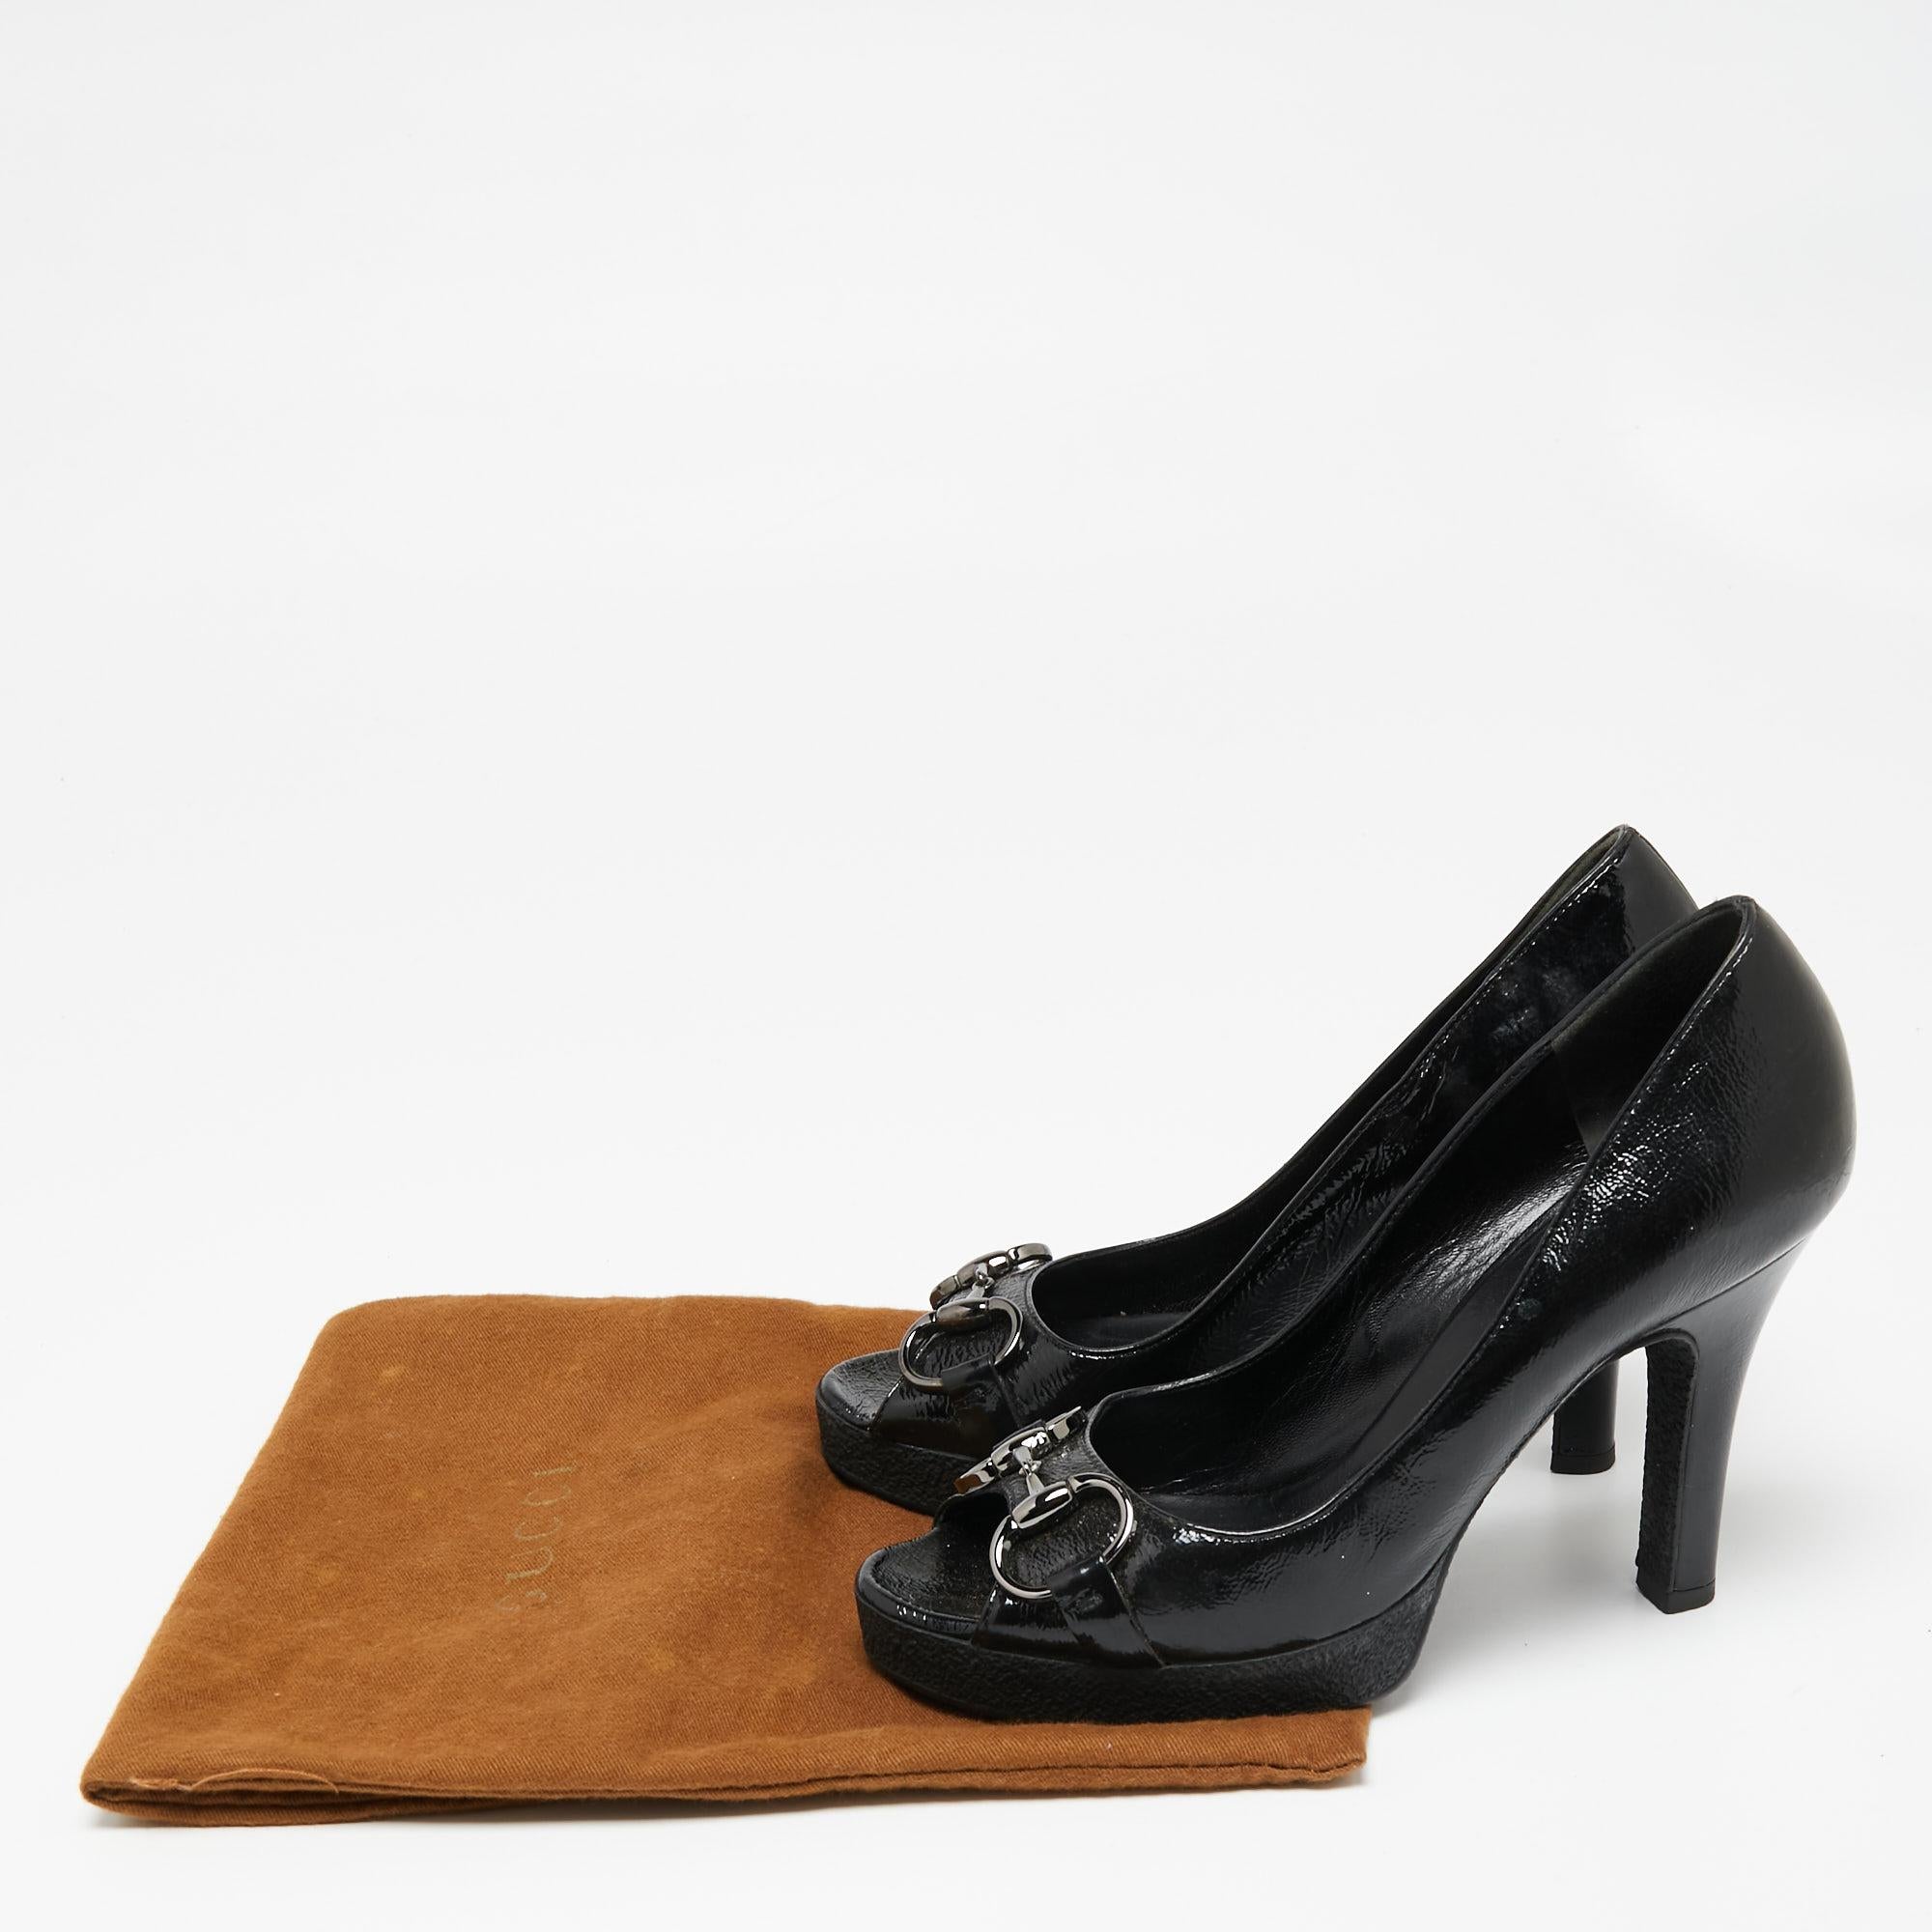 Gucci Black Patent Leather Horsebit Peep Toe Platform Pumps Size 35.5 5